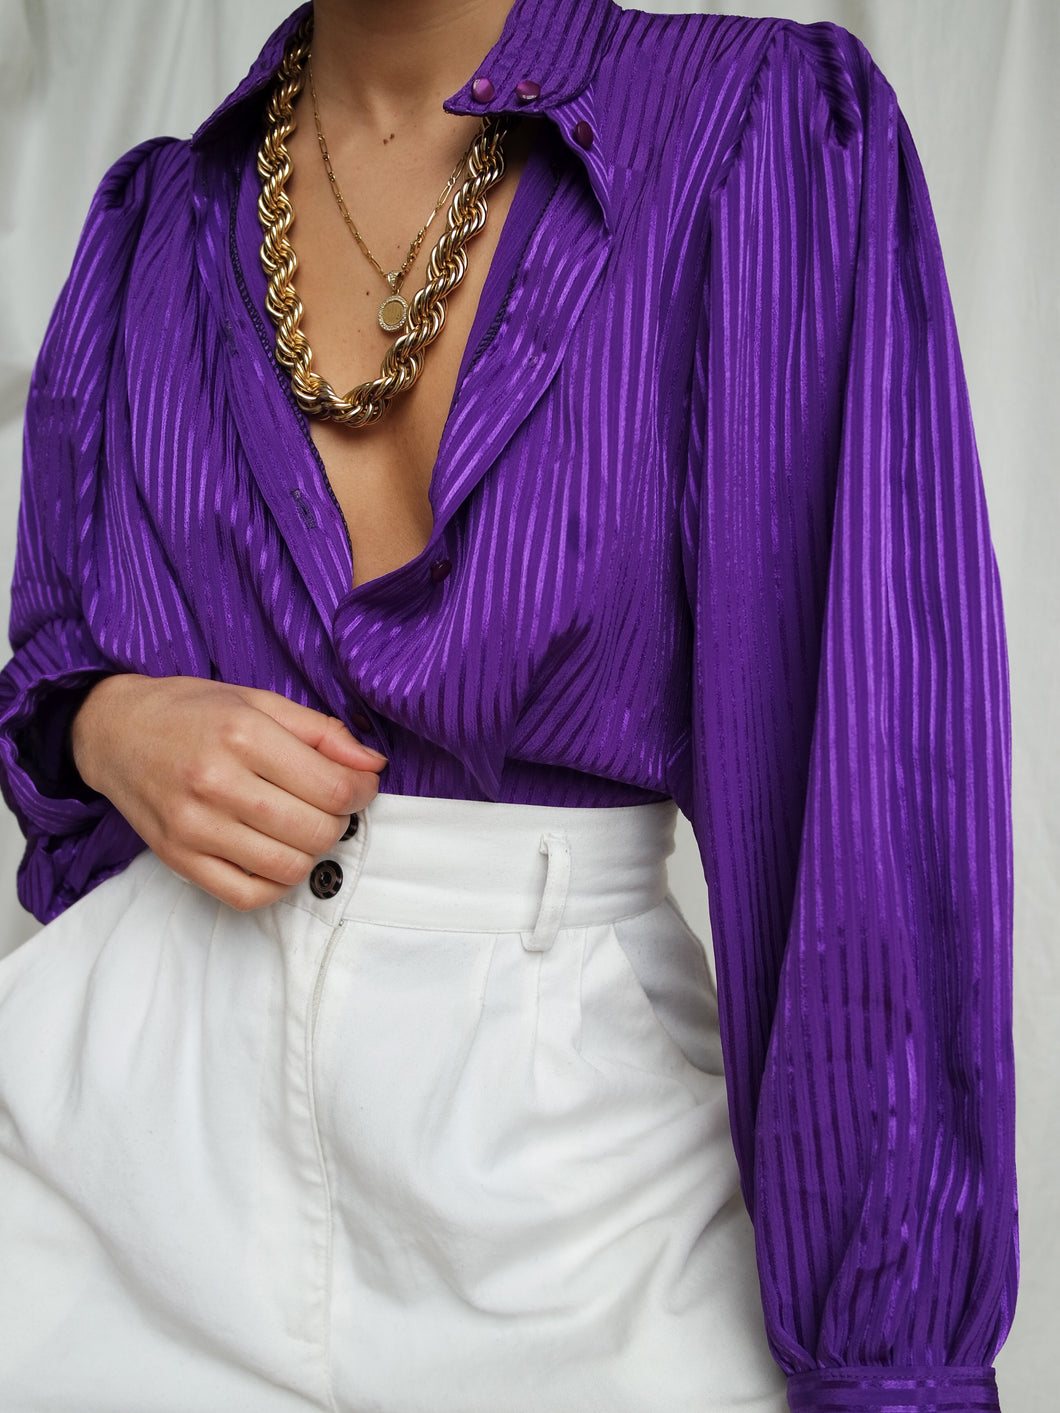 Violetta blouse